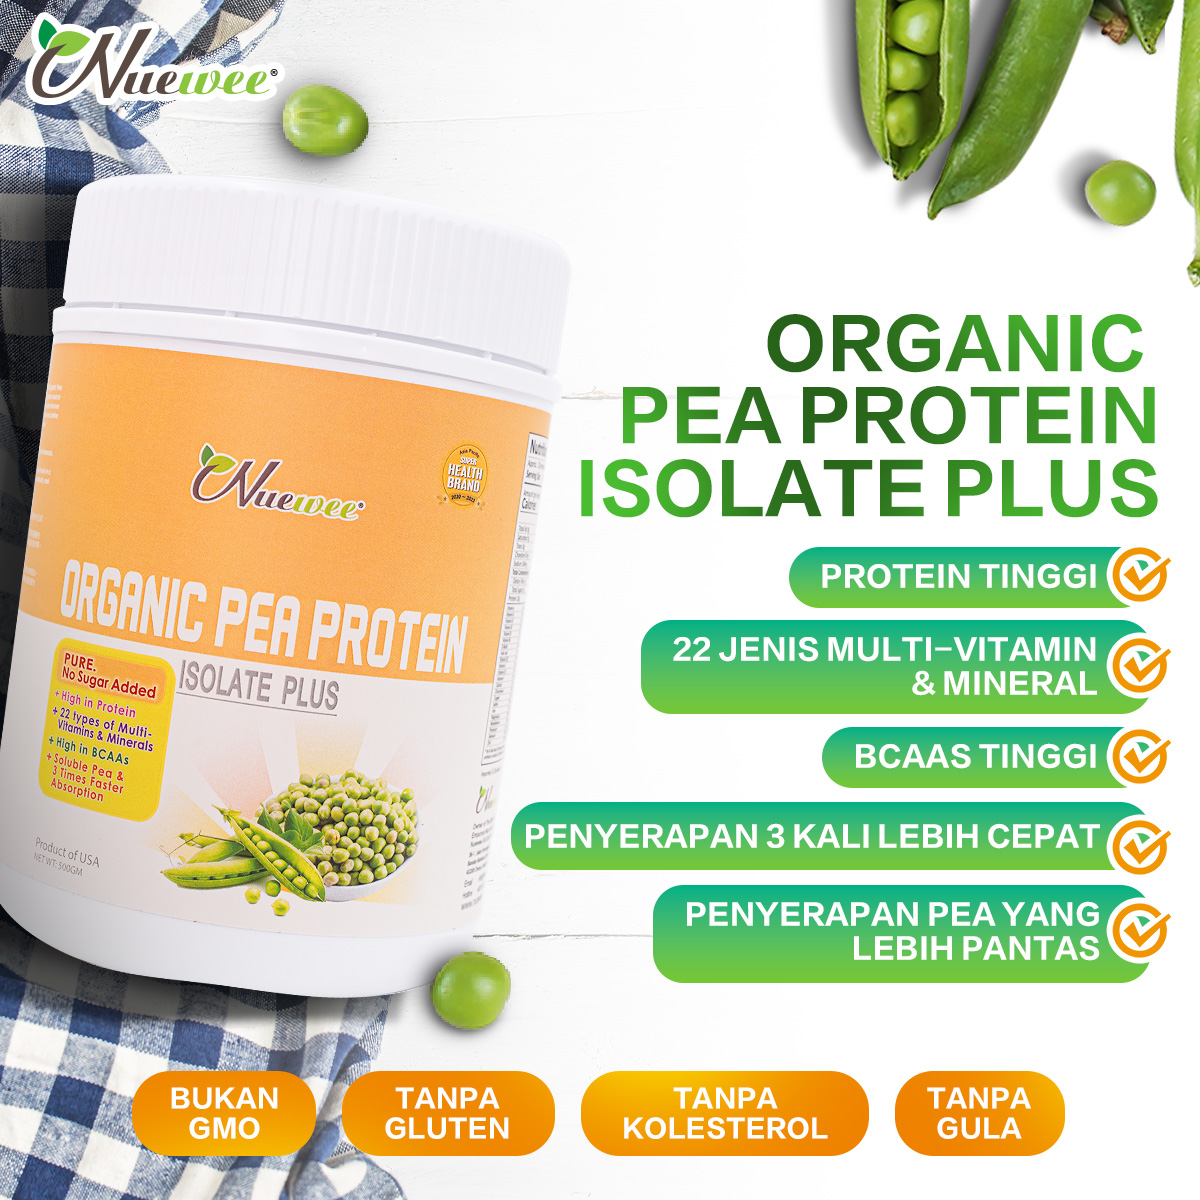 Nuewee-Organic-Pea-Protein-Isolate-Plus-USP